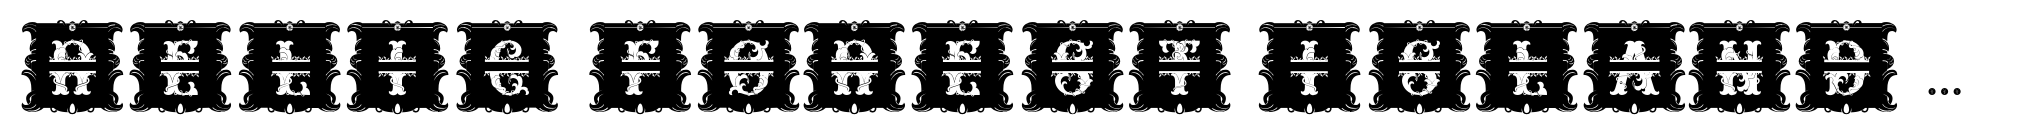 Relic Forest Island 3 Monogram frame combination image